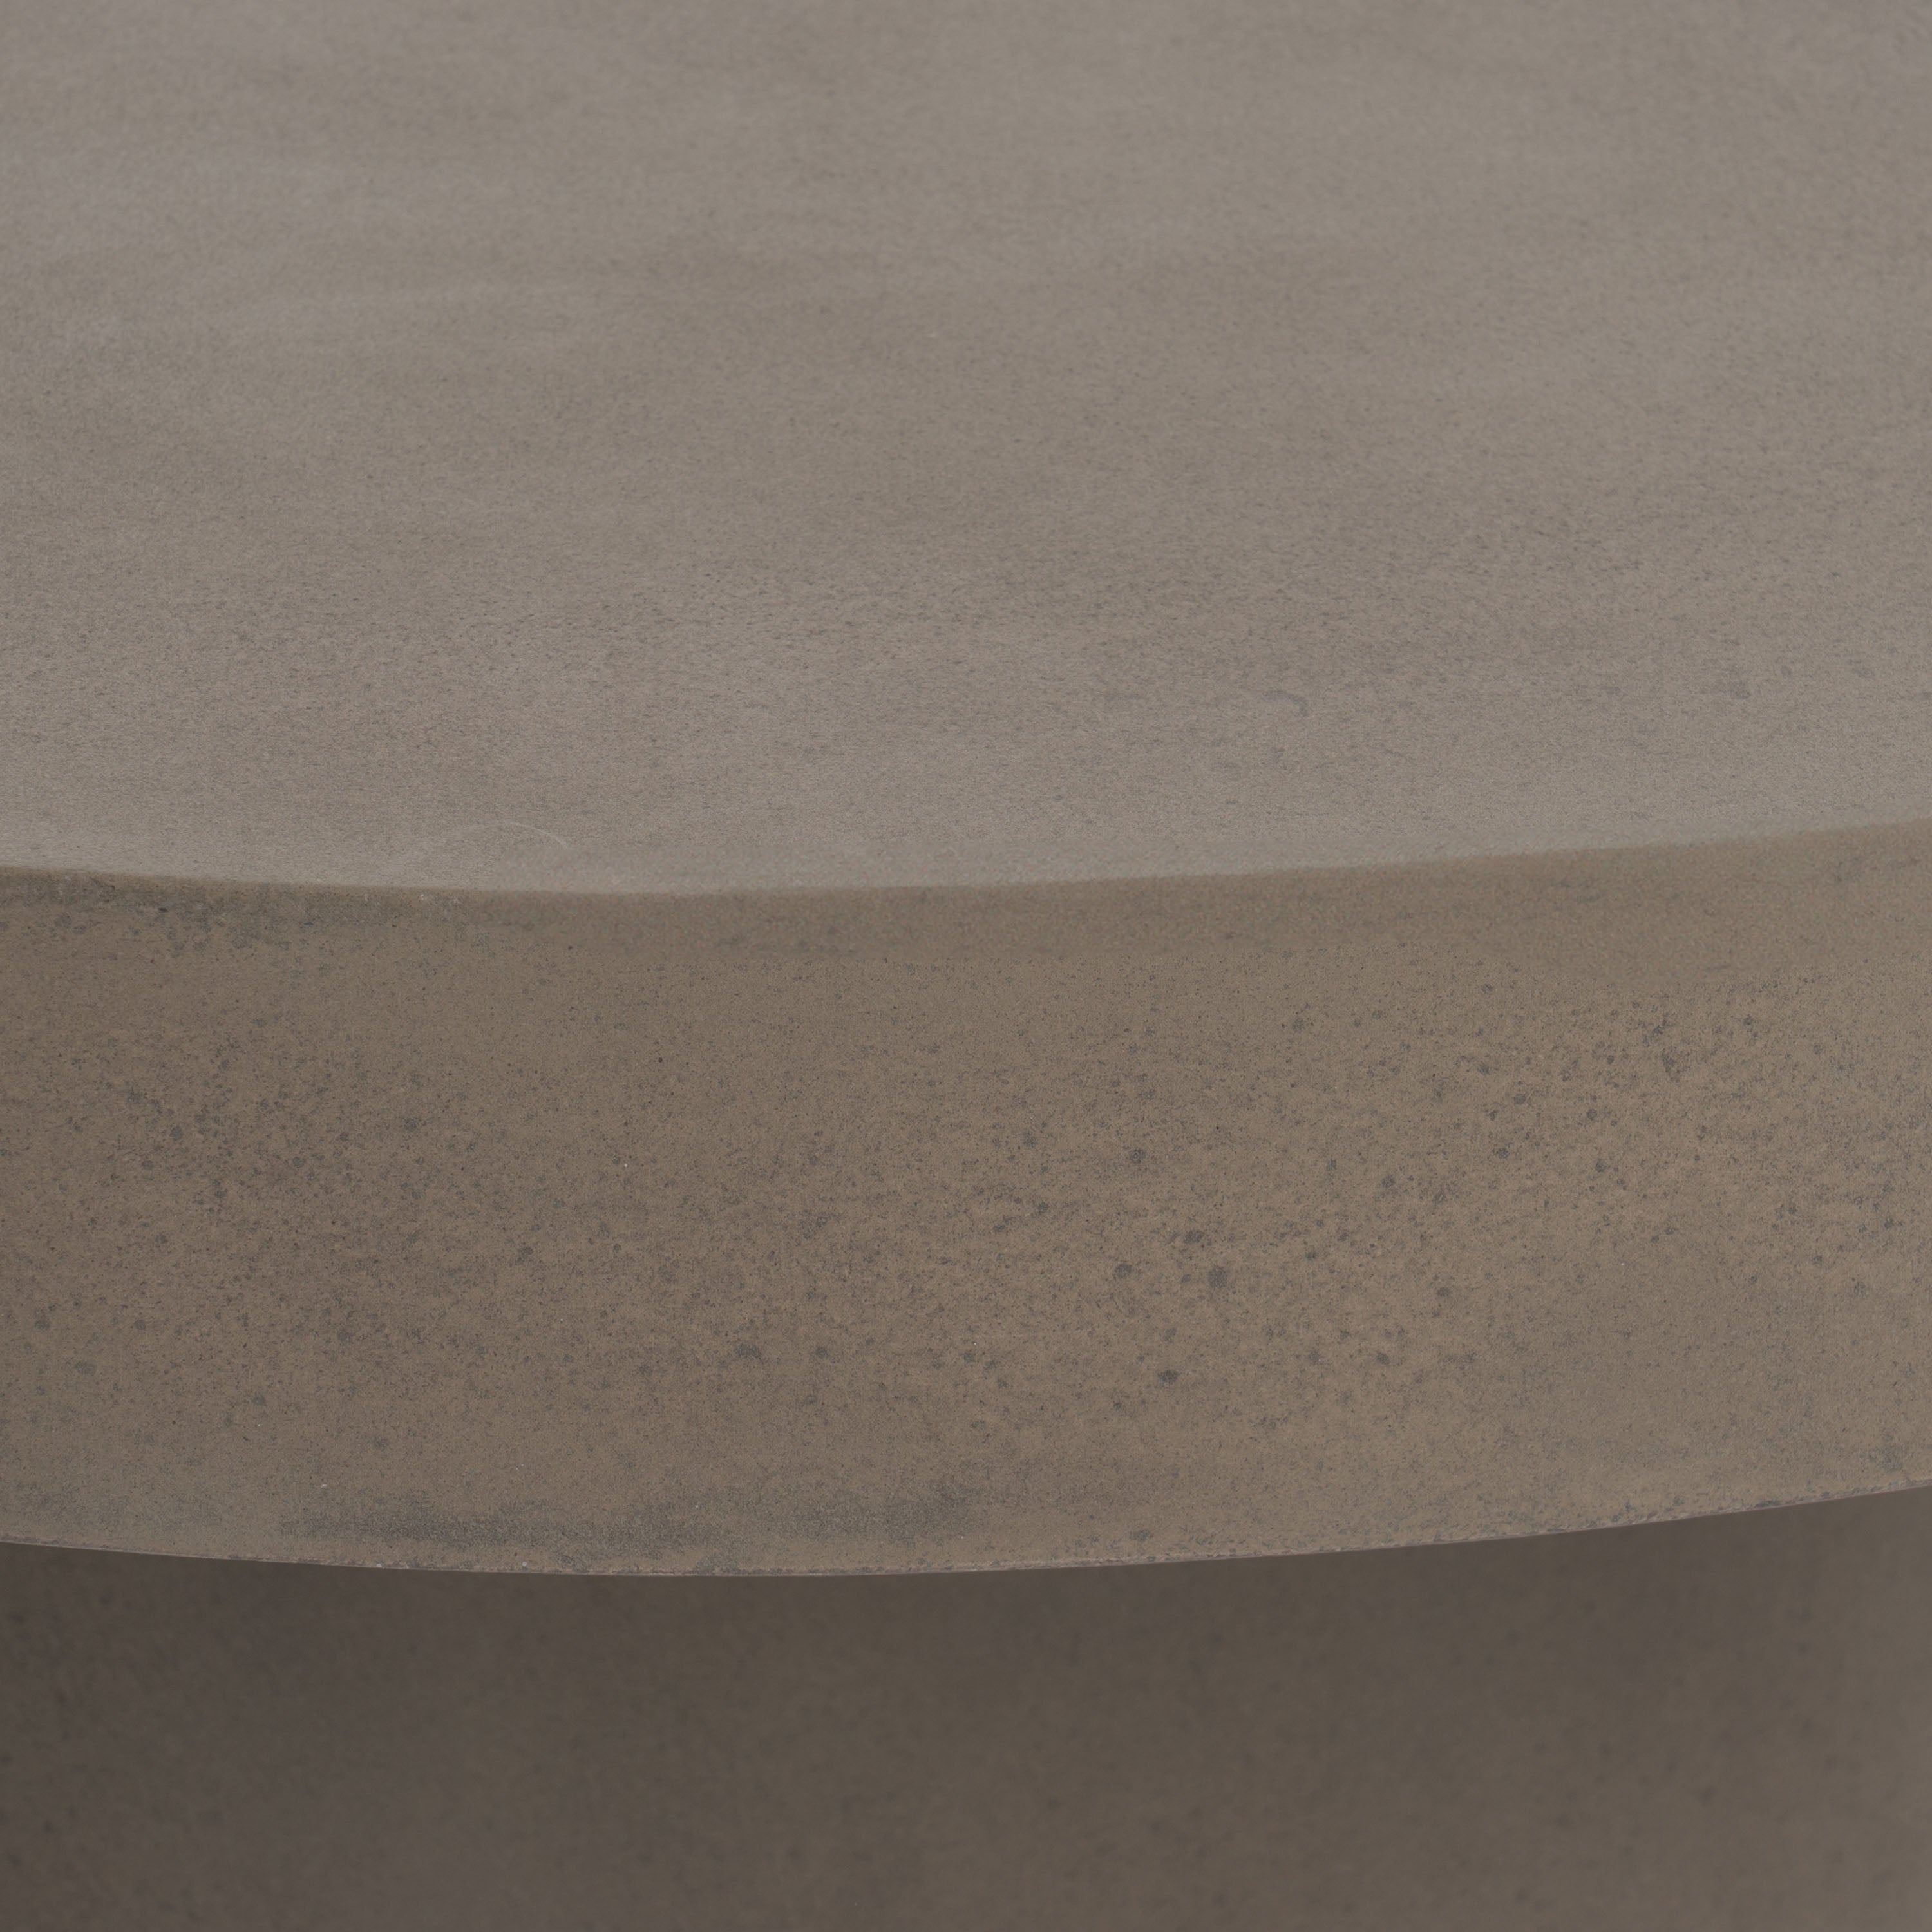 Modrest Morley - Modern Round Concrete Coffee Table